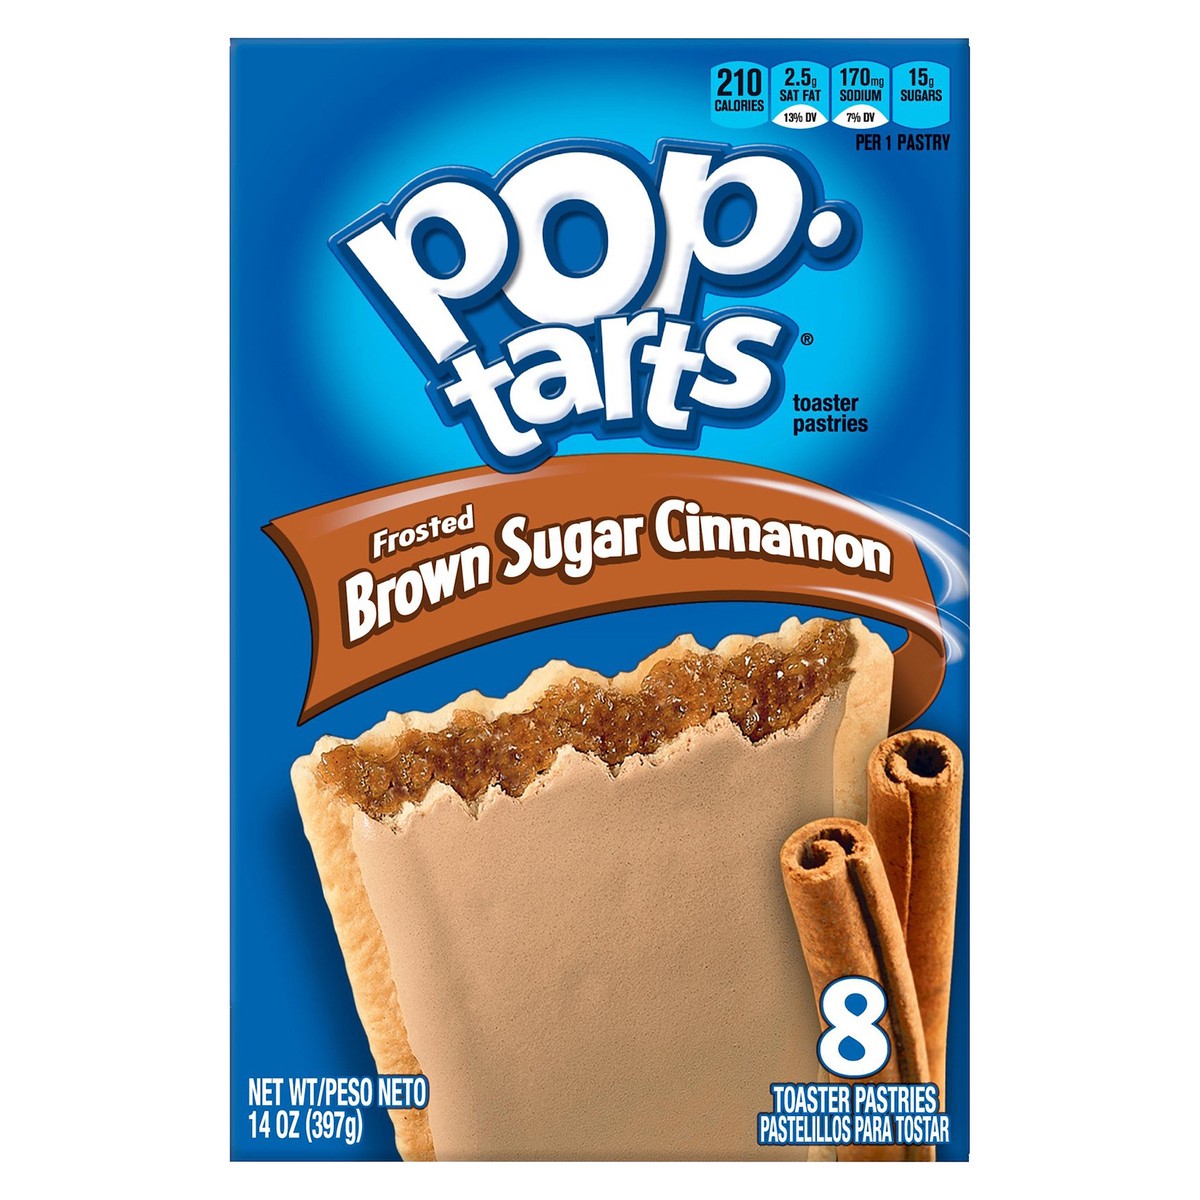 slide 10 of 10, Pop-Tarts Frosted Brown Sugar Cinnamon Pastries, 8 ct